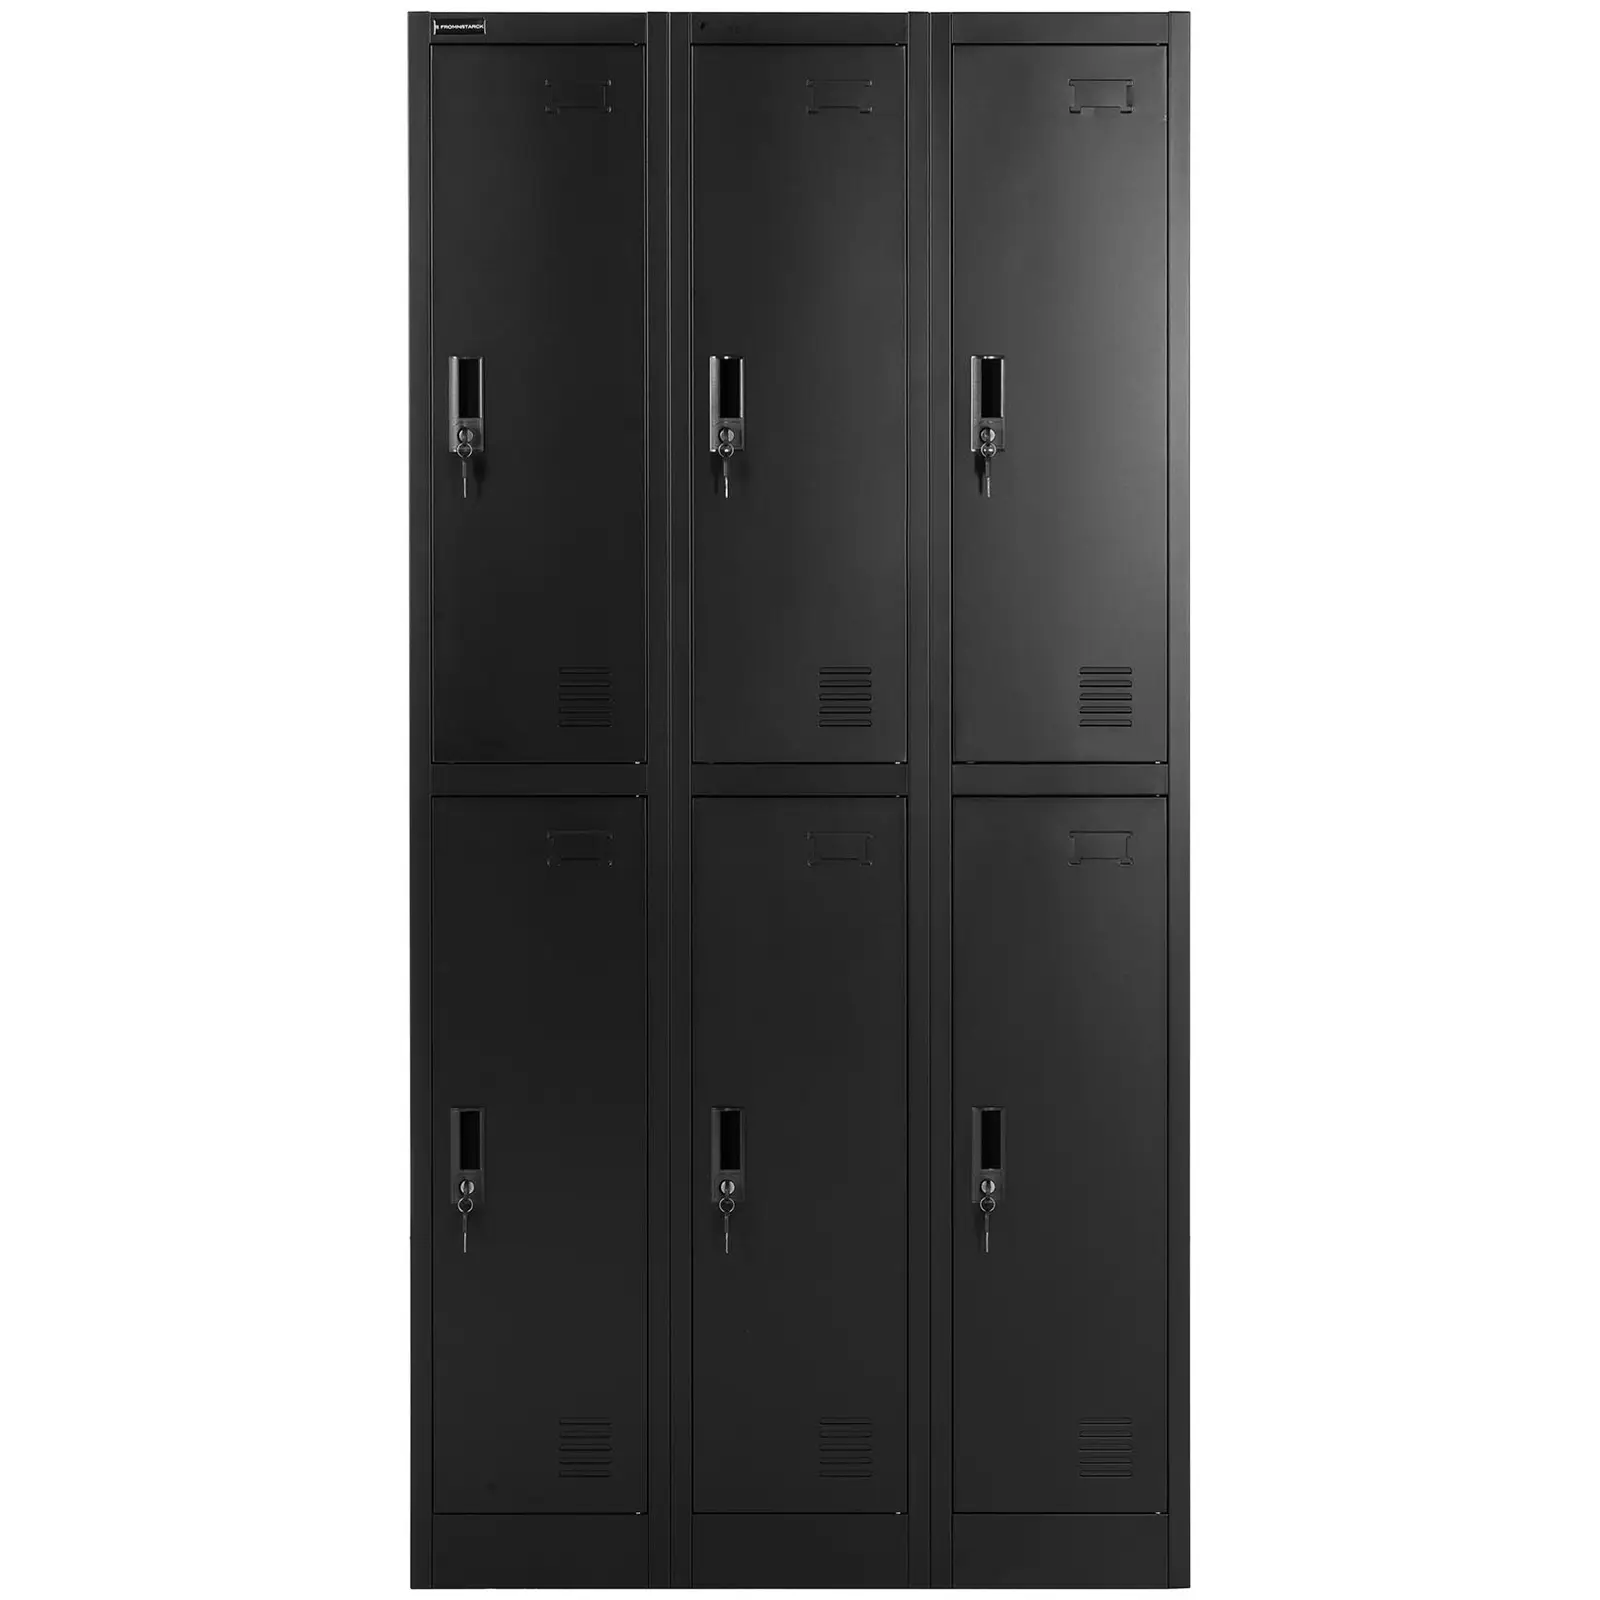 Locker - 6 shelves - lockable - 200 kg